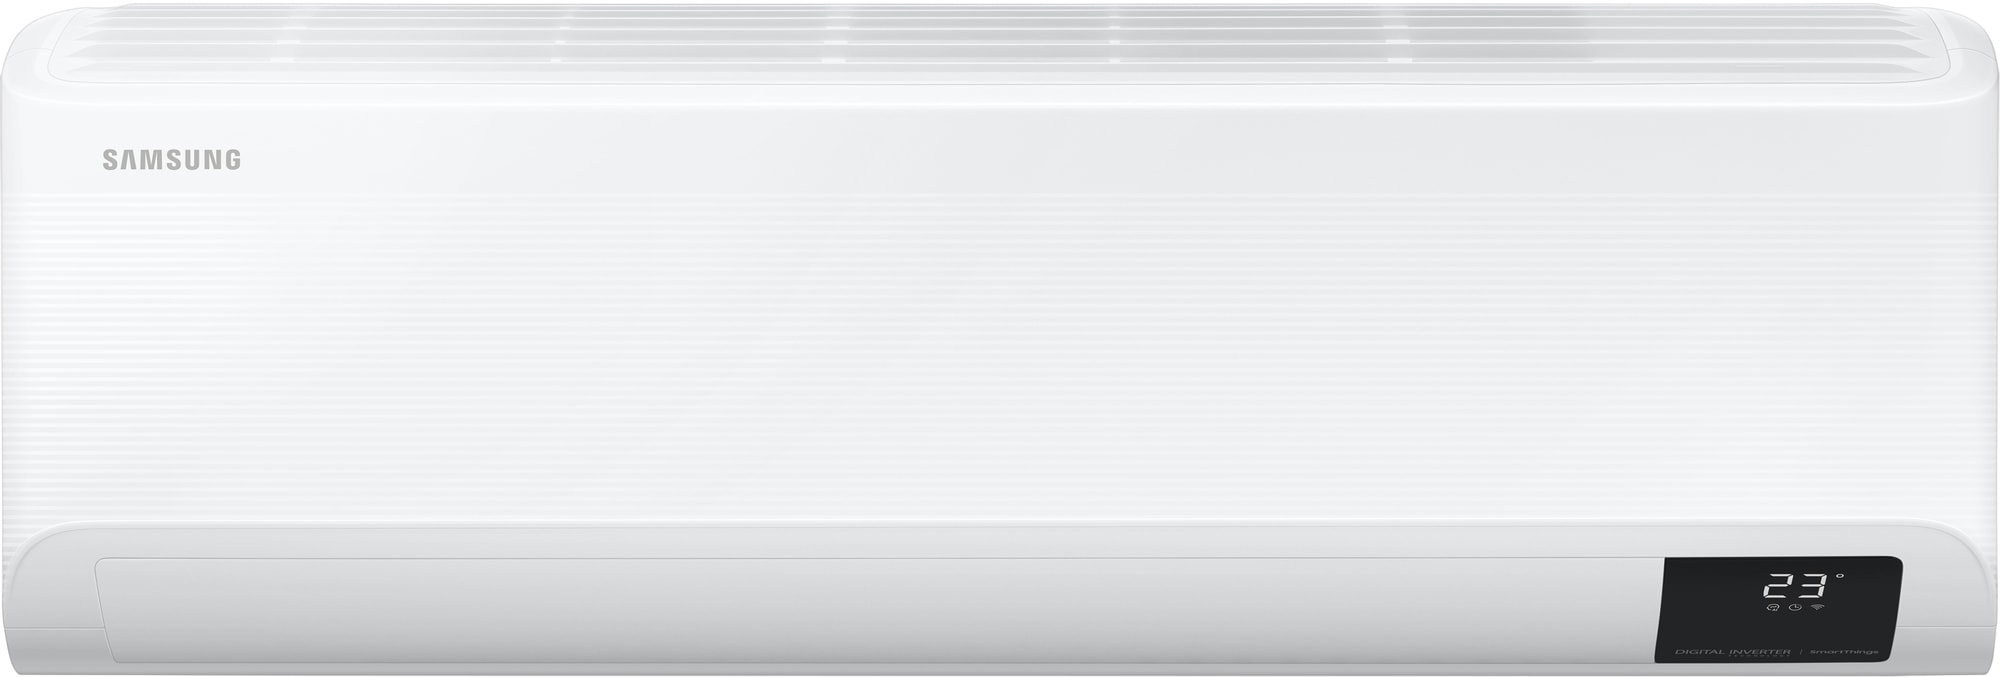 Samsung Nordic Home Premium 35 varmepumpe